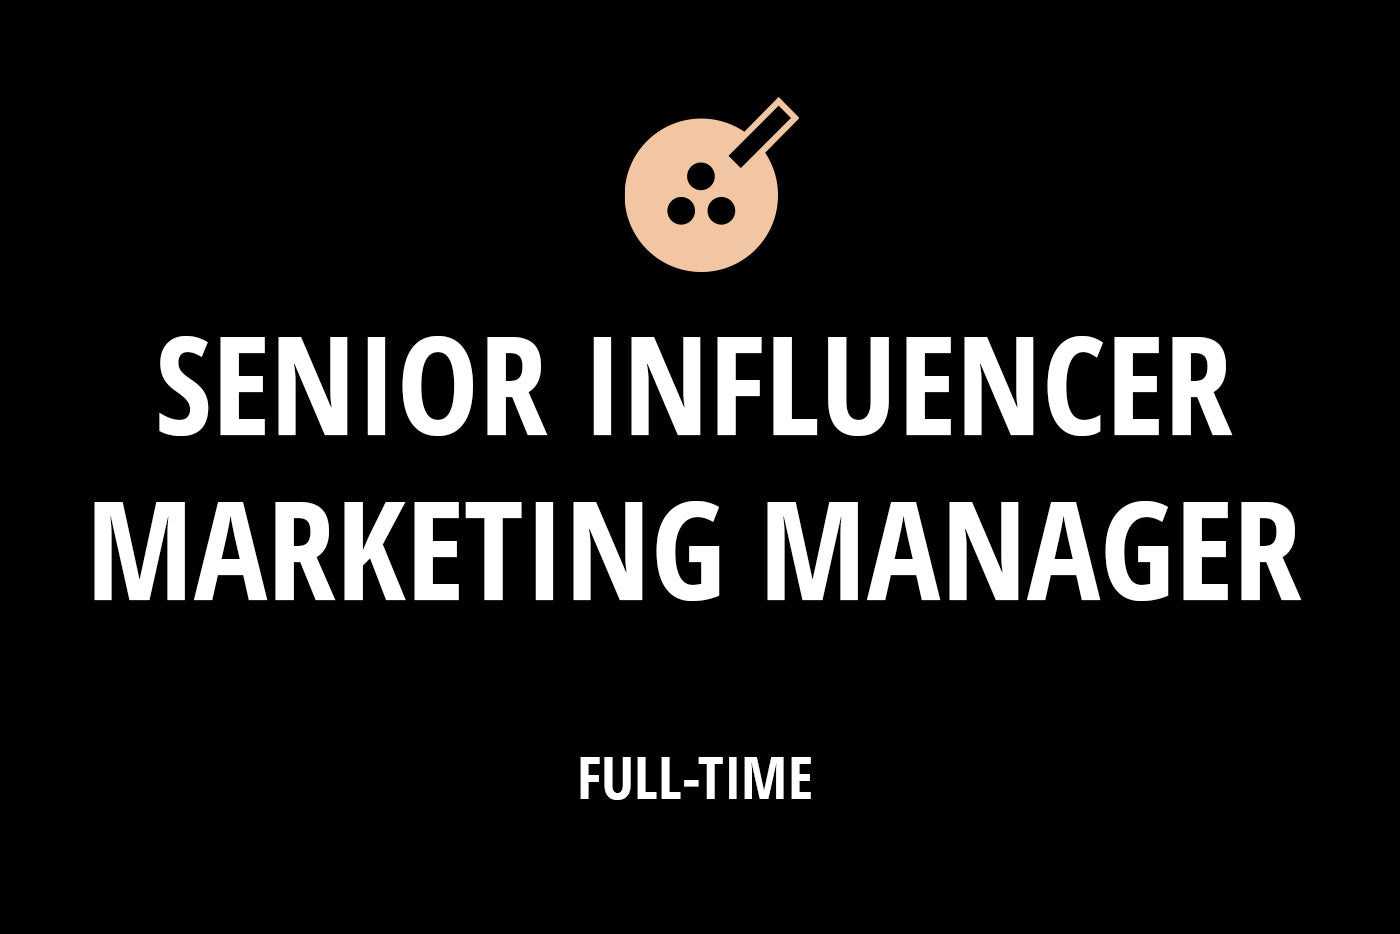 Senior Influencer Marketing Manager